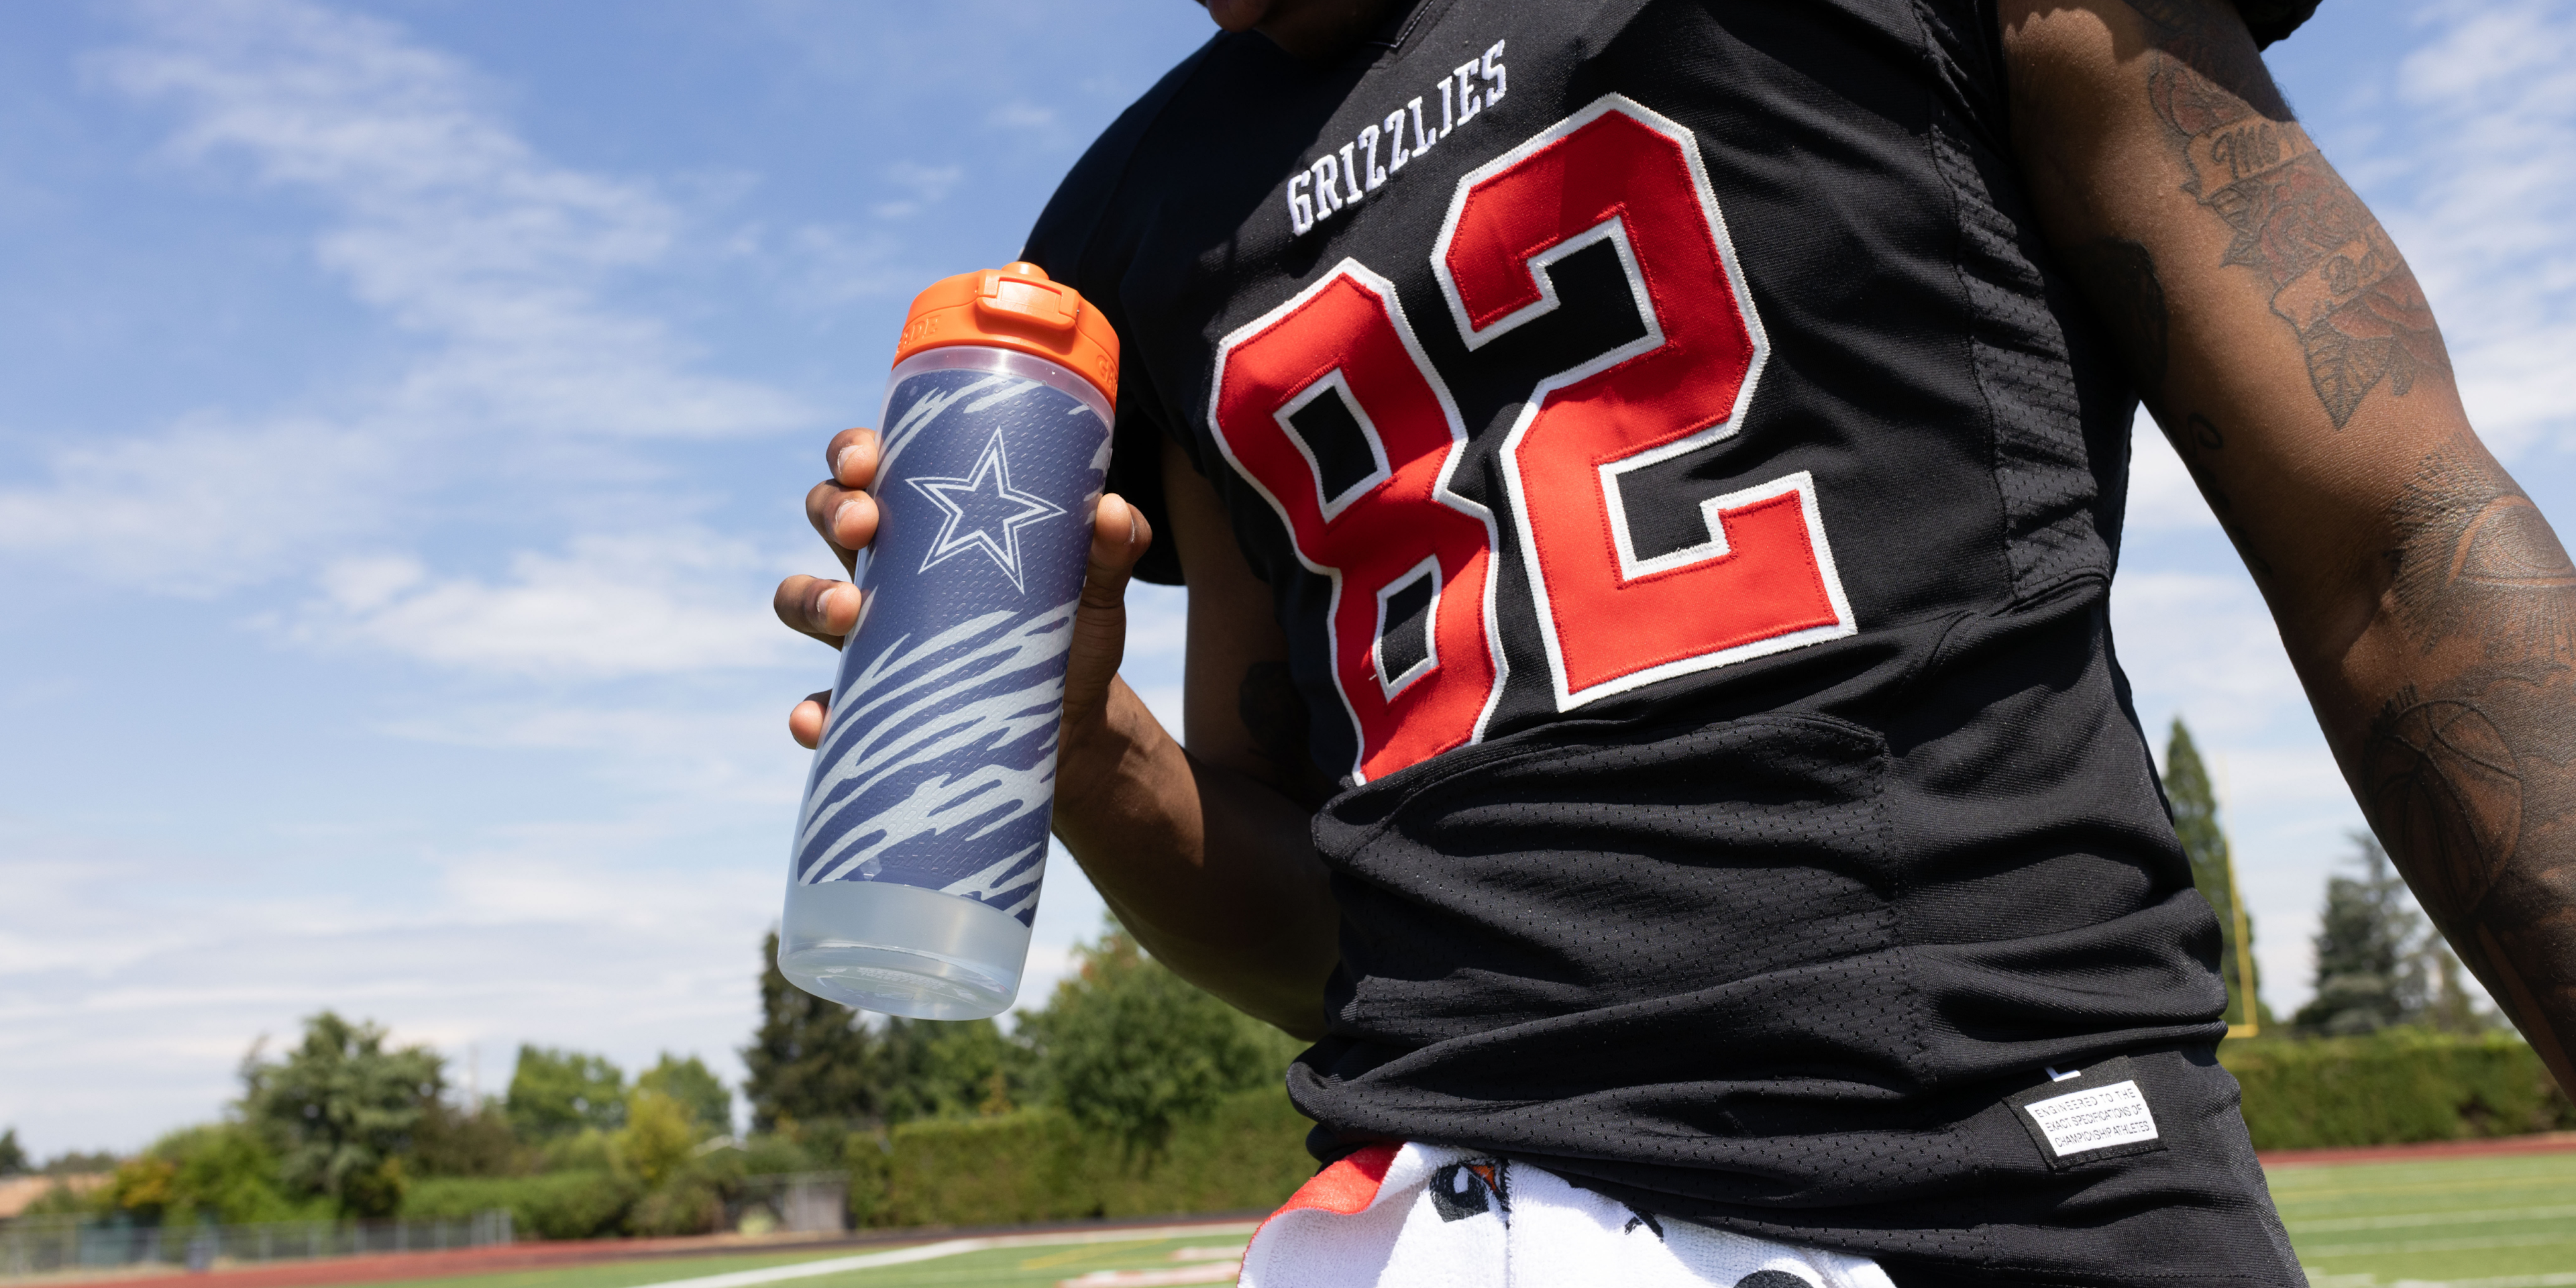 NFL athlete holding Gx NFL bottle